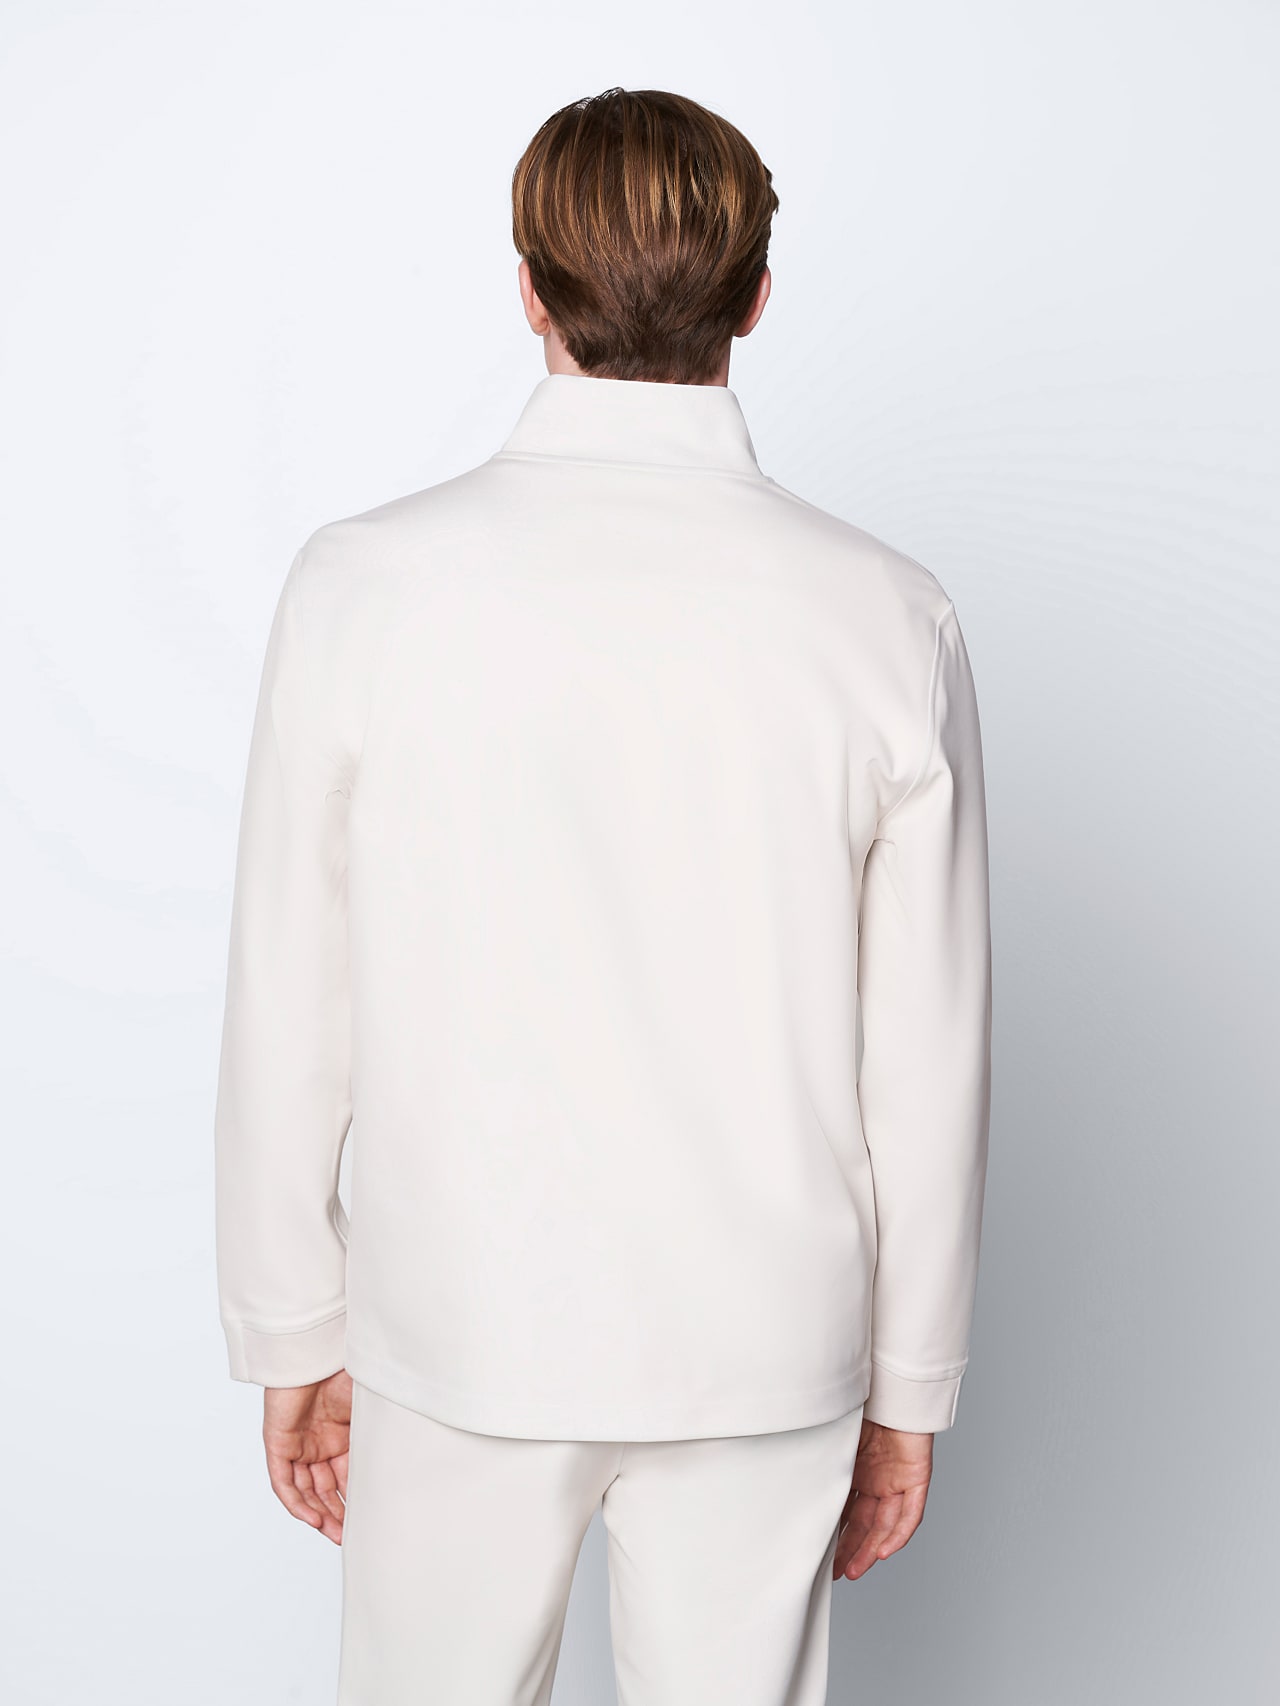 AlphaTauri | SROTO V2.Y6.01 | Waterproof Taurobran® Half-Zip Sweater in offwhite for Men